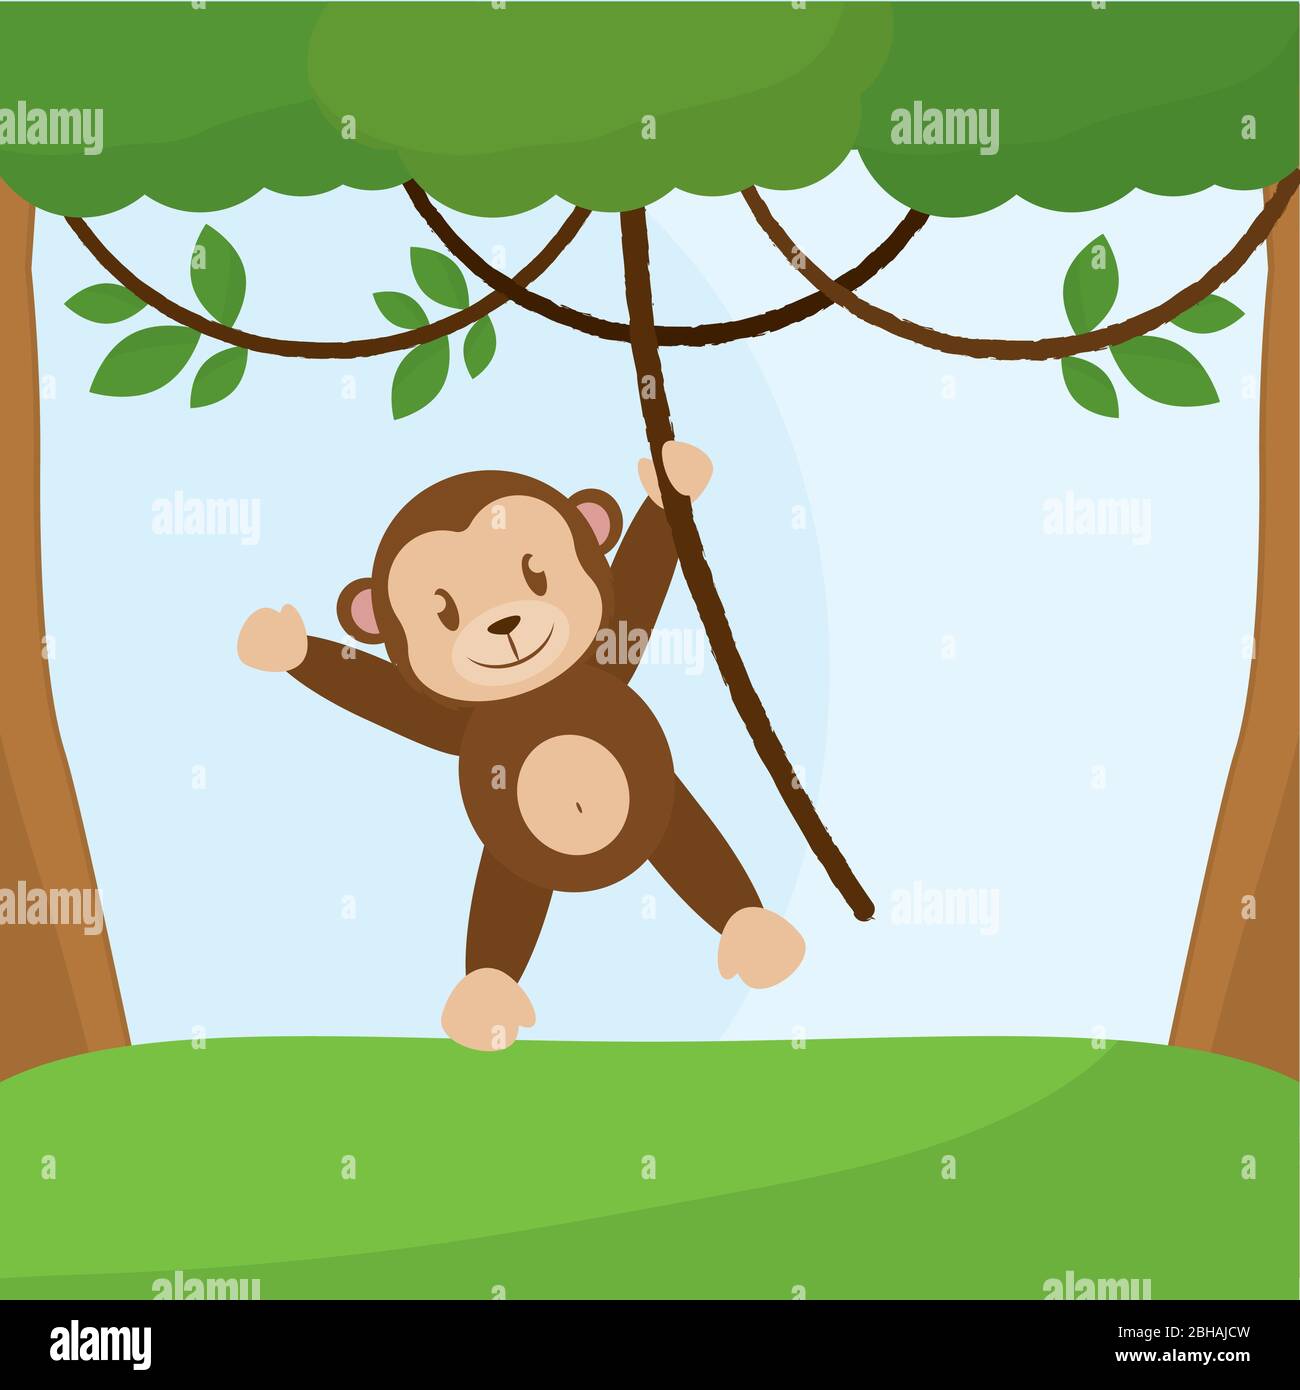 Cartoon Cute Monkey Image Vectorielle Stock Alamy